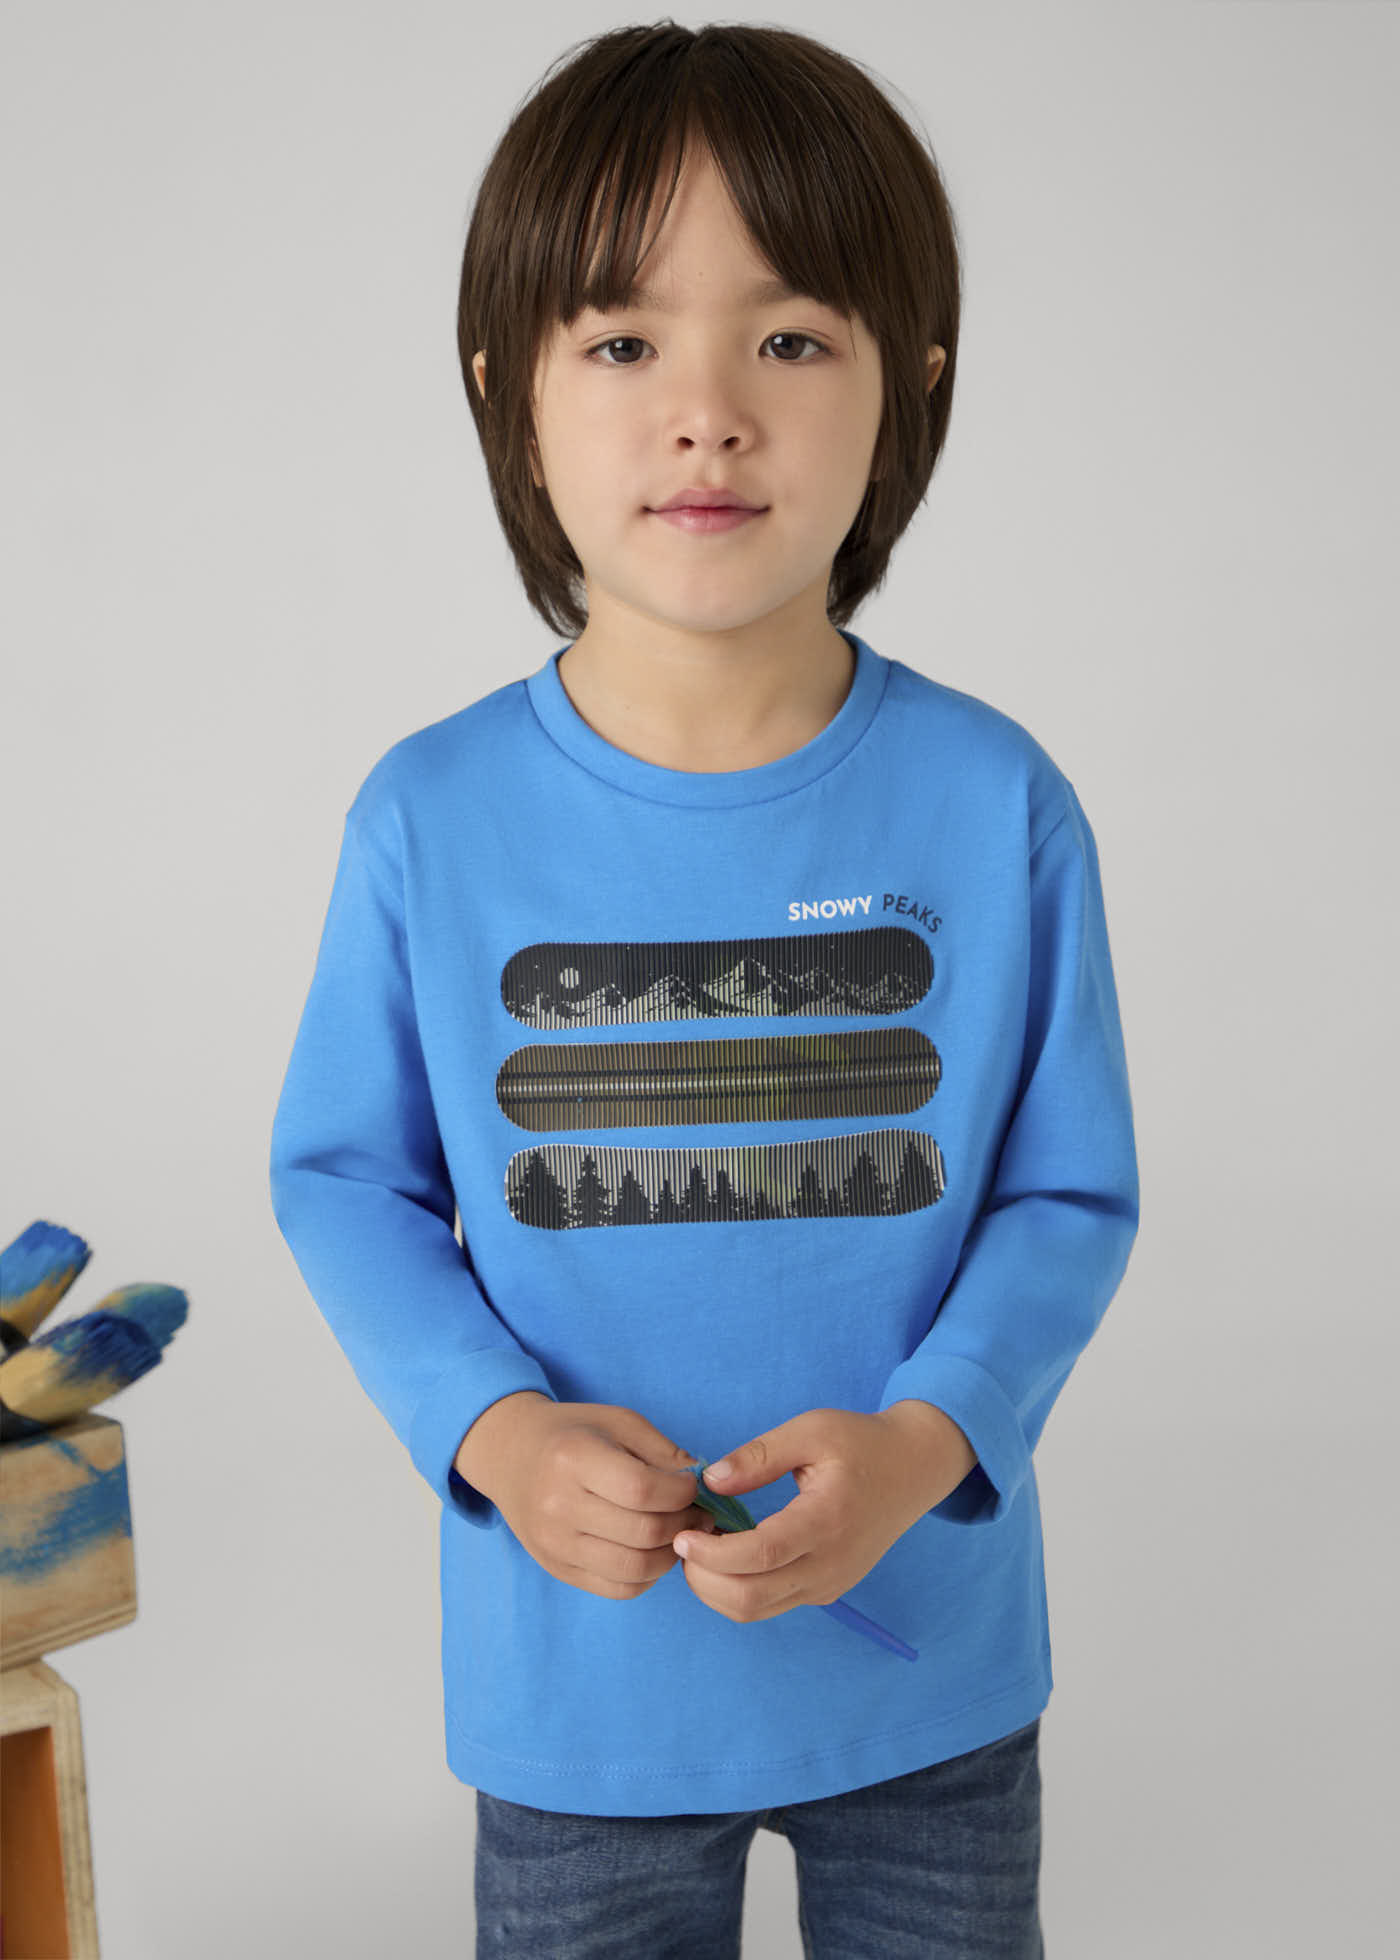 Camiseta diseño lenticular niño